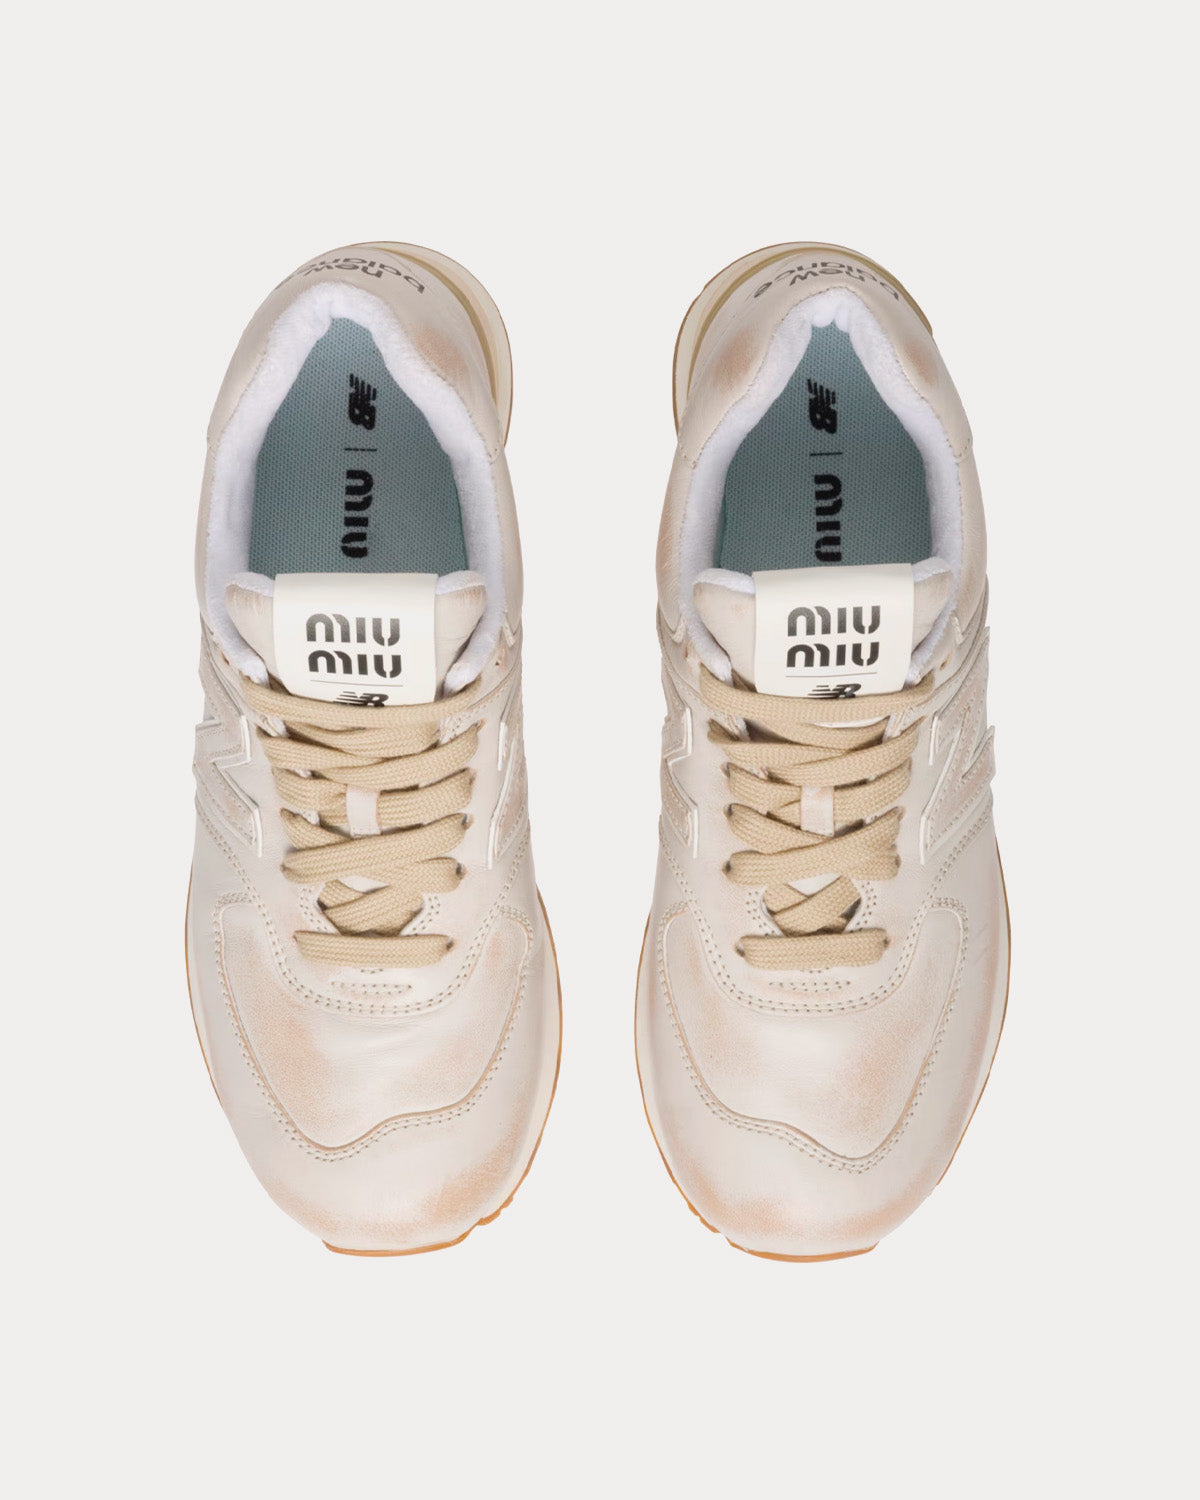 New Balance x Miu Miu - 574 Vintage-Effect Nappa Leather White Low Top Sneakers